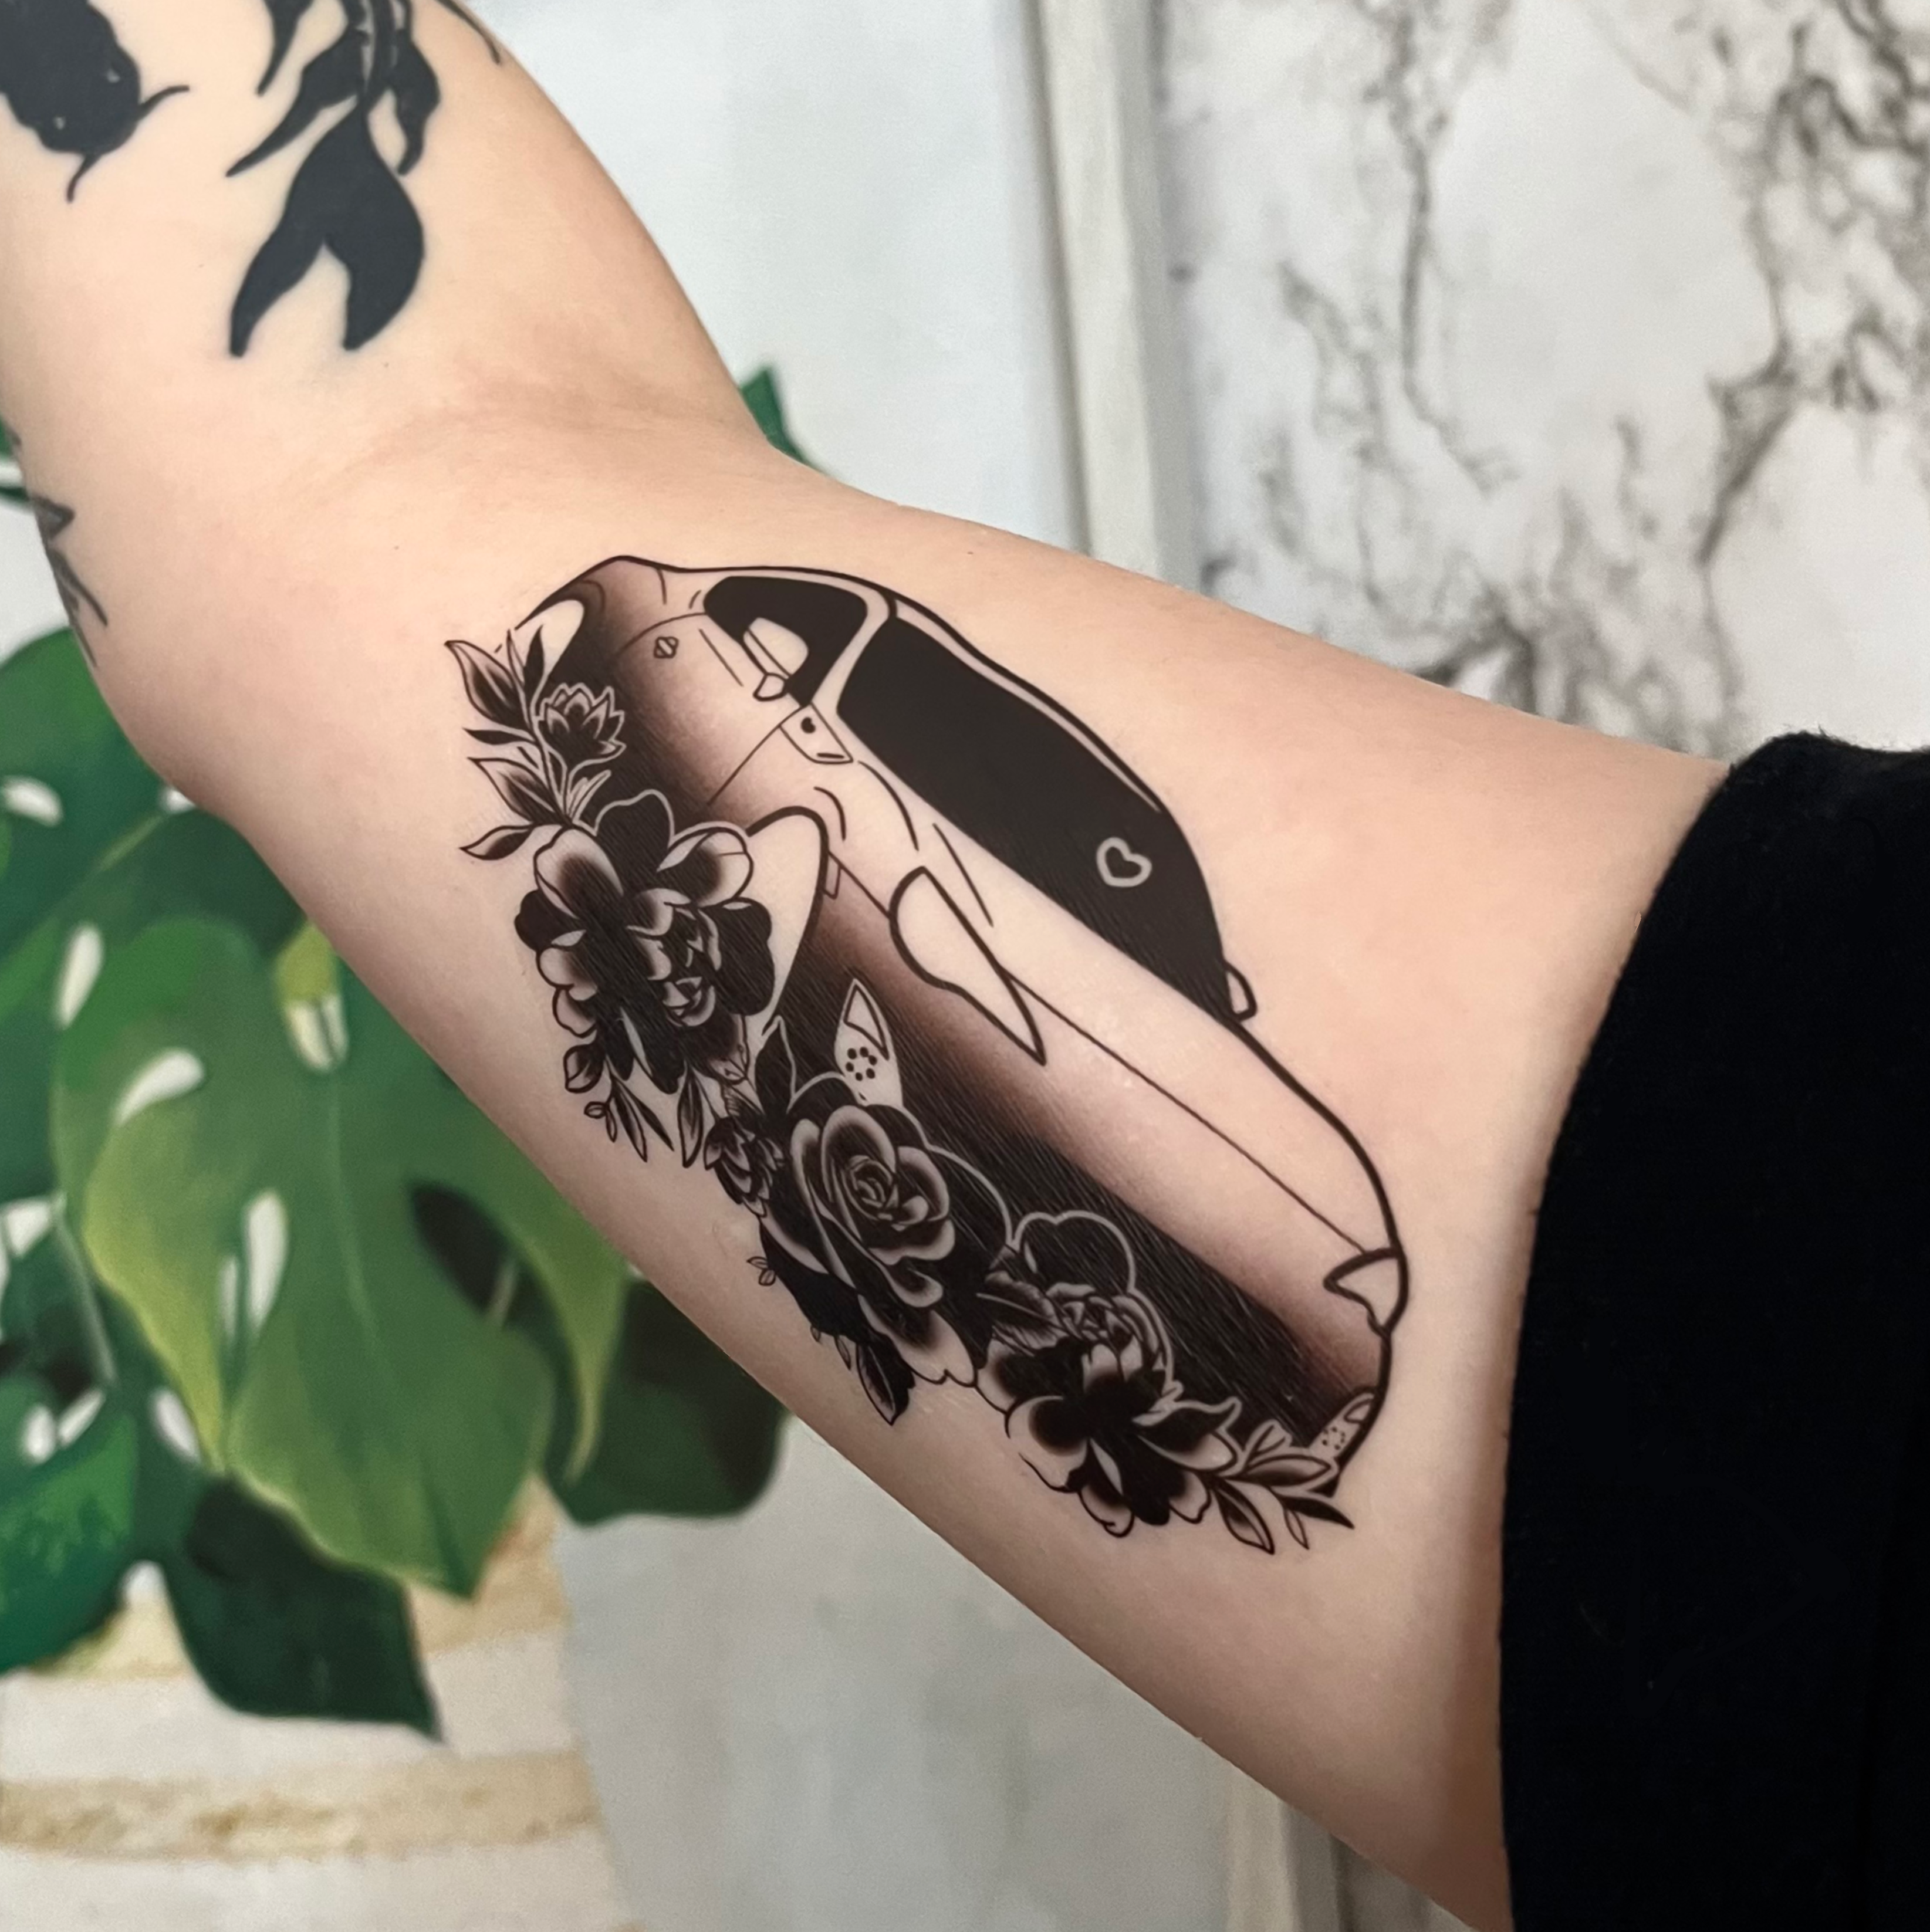 Courtney Dauwalter | Mantra Temporary Tattoos – DFTBA